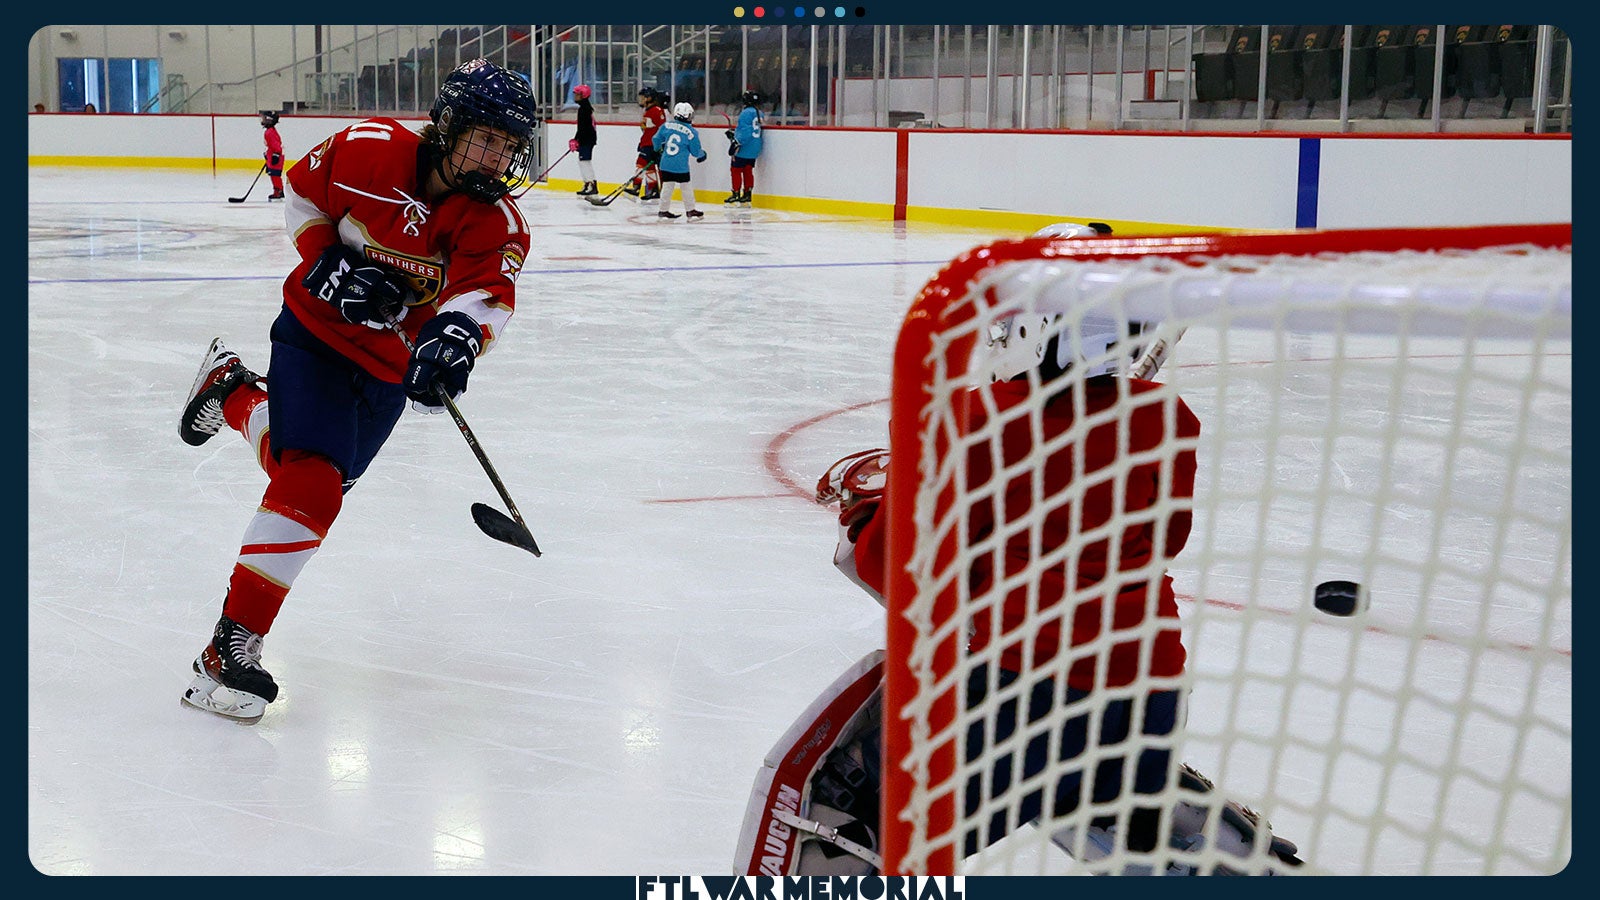 Hockey at Baptist Health IcePlex. Photo of hockey player shooting a puck.